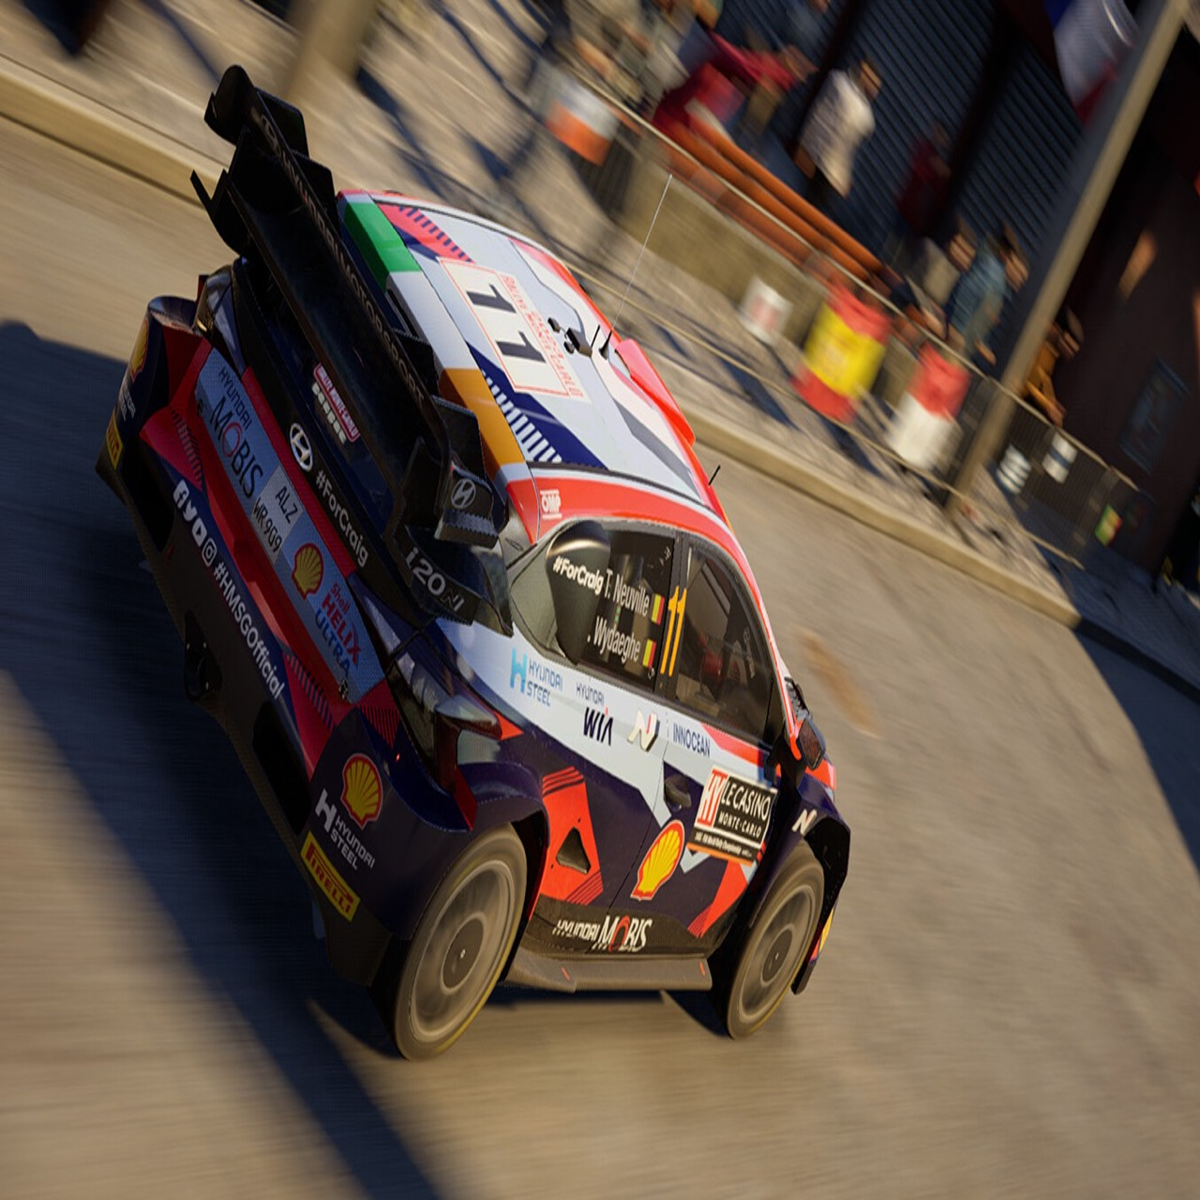 EA SPORTS WRC MAIN MENU : r/EASPORTSWRC